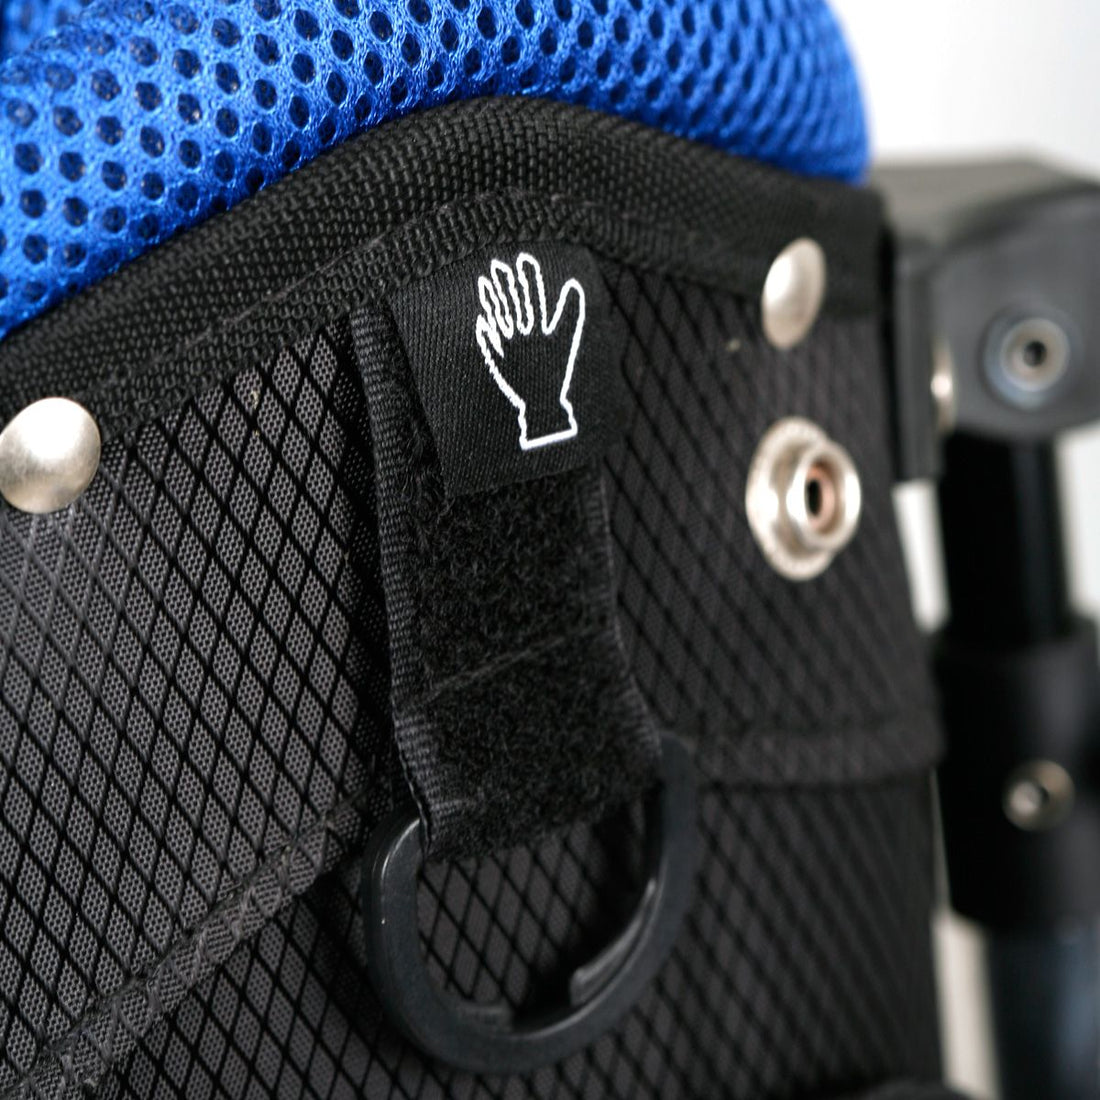 Velcro glove holder and towel ring on a black/blue Orlimar ATS Junior Golf Bag